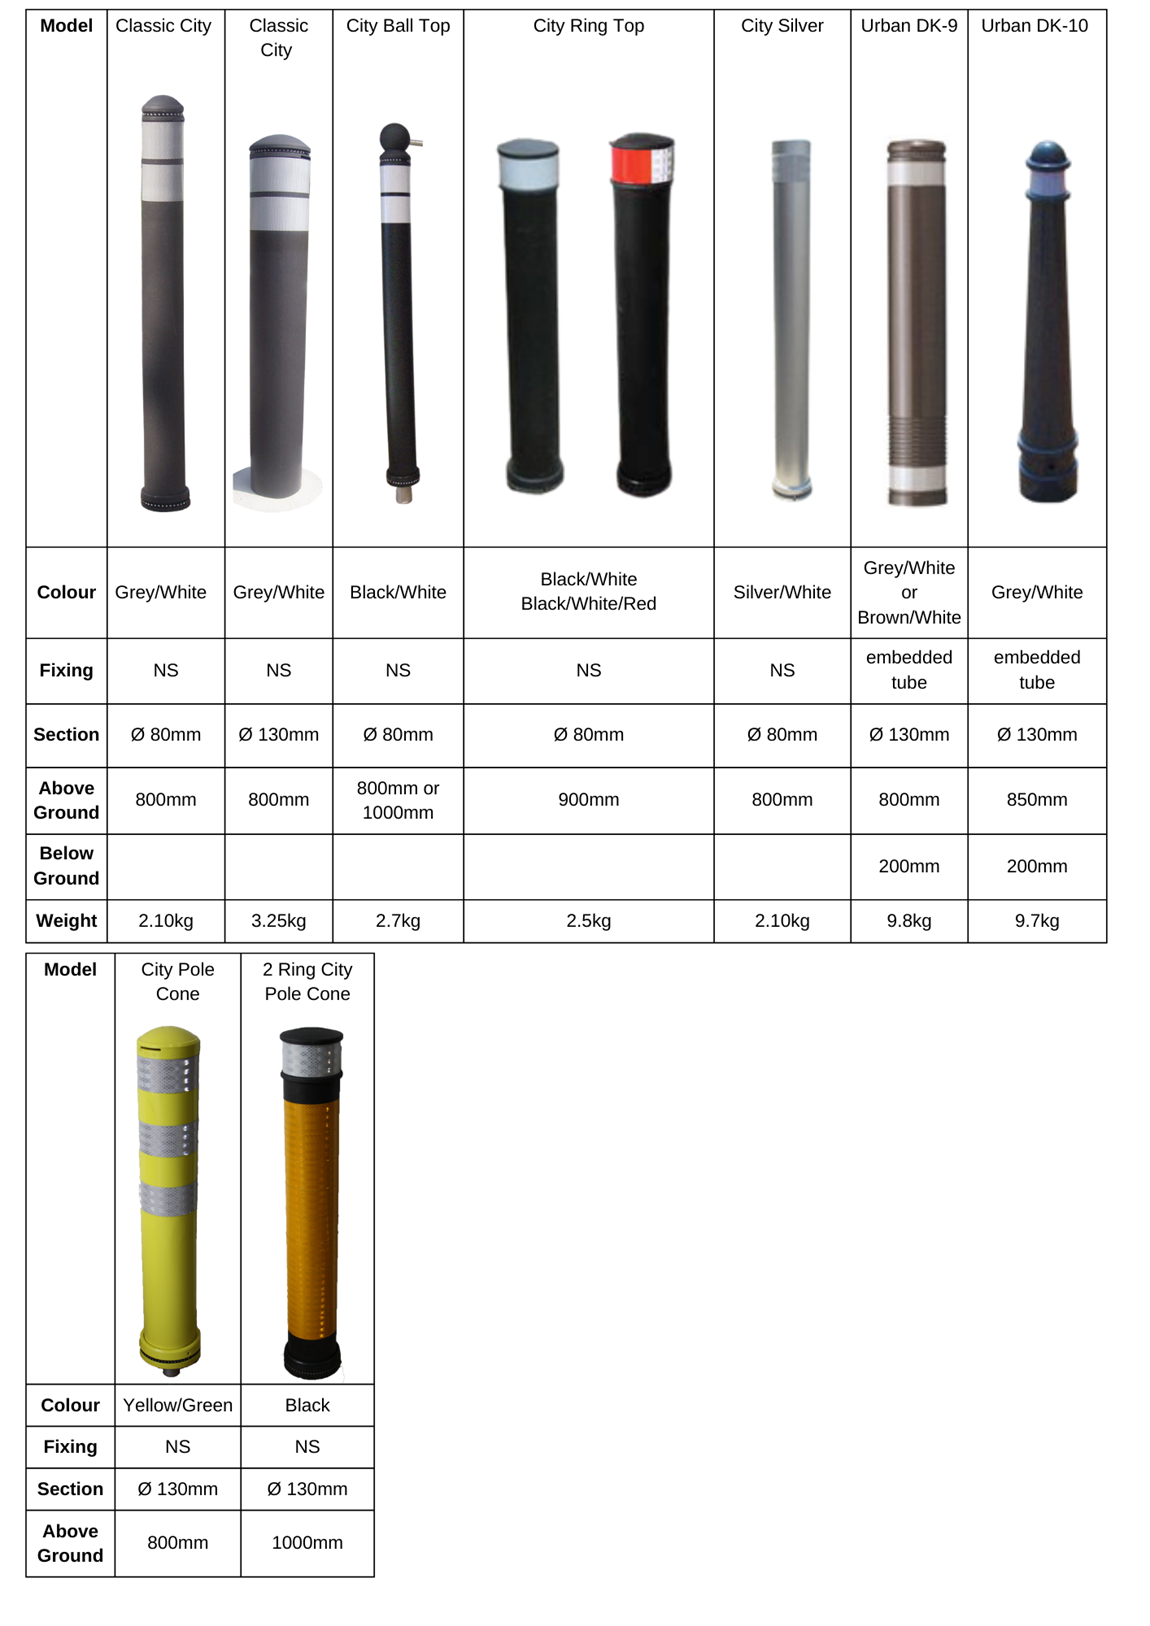 Jislon City Pole Cones Product Range Information